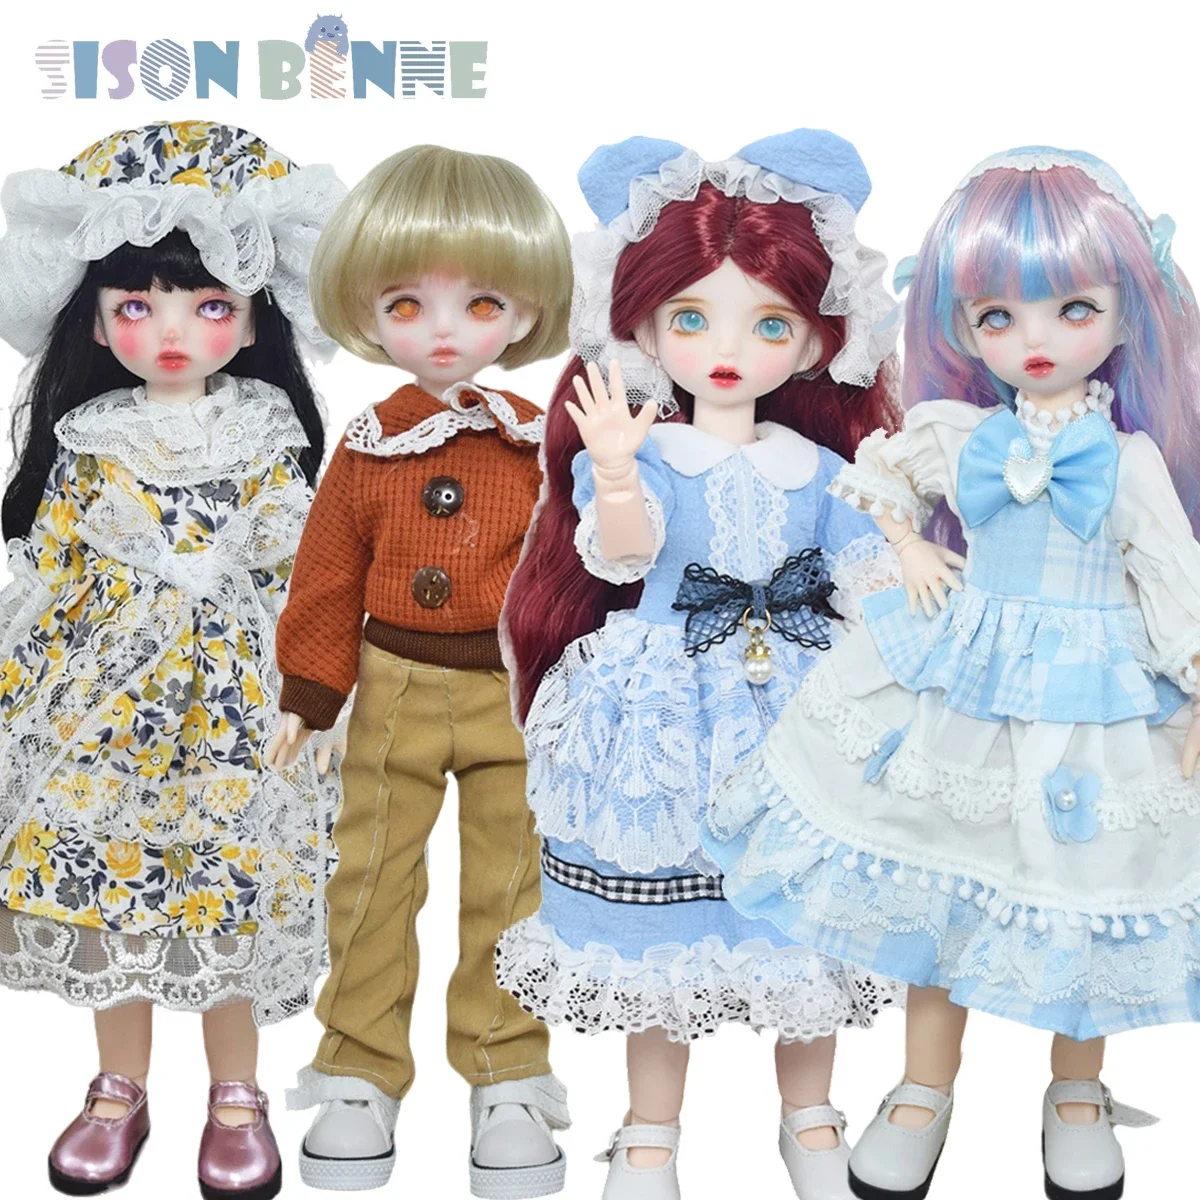 Кукла SISON BENNE 1/6 с механични ставите, сладка кукла-момиче в дрехи, перуки, детска играчка, кукла с височина 12 см